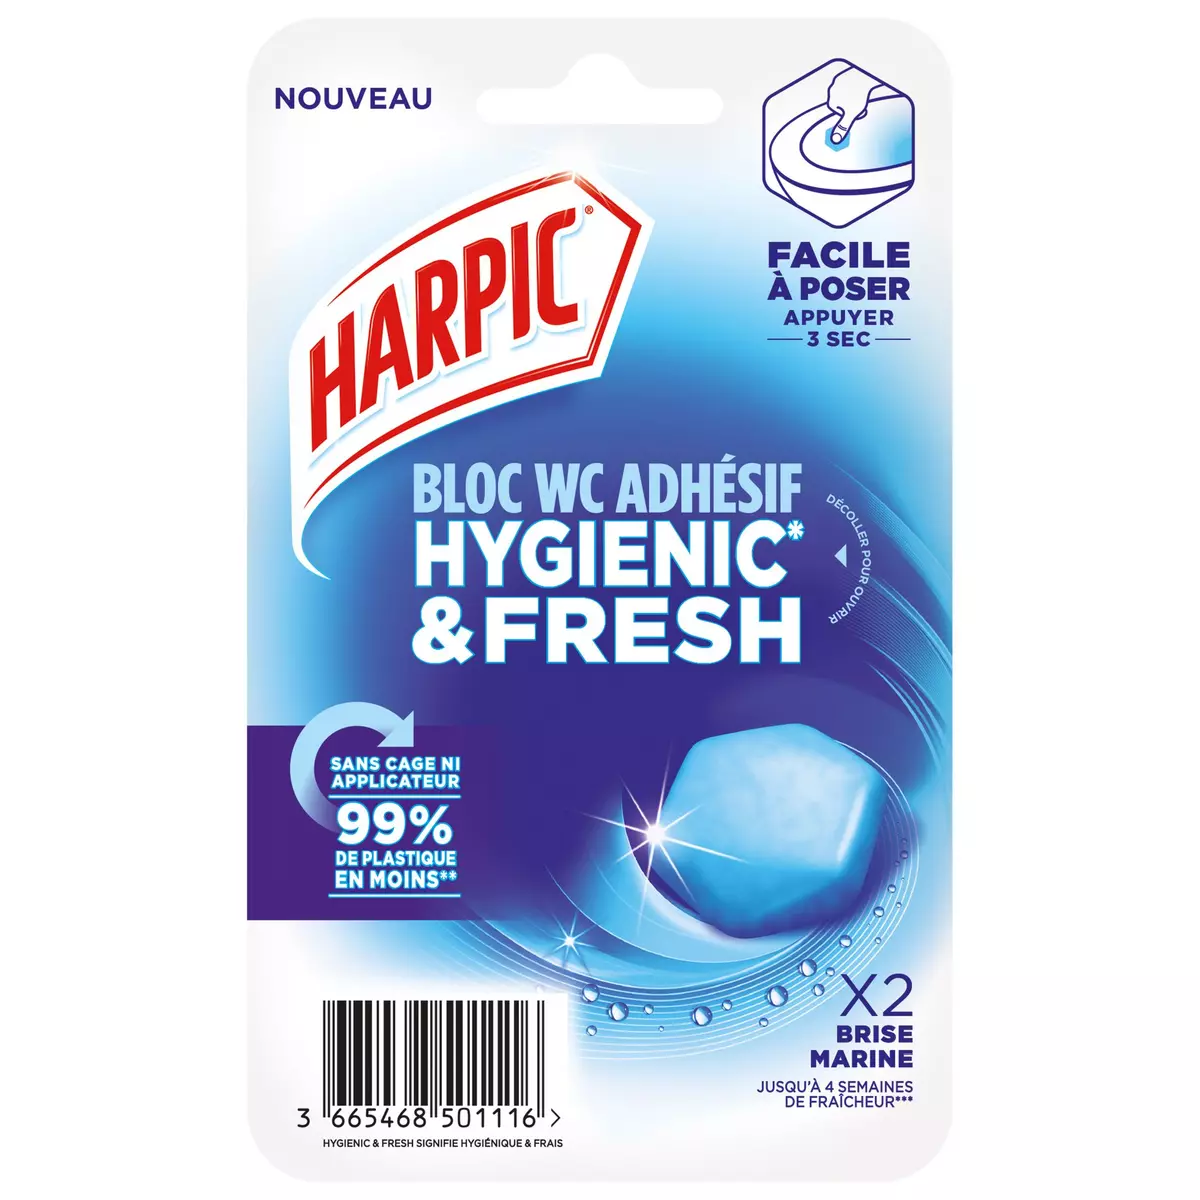 HARPIC Bloc WC adhésif hygienic & fresh brise marine 2 blocs